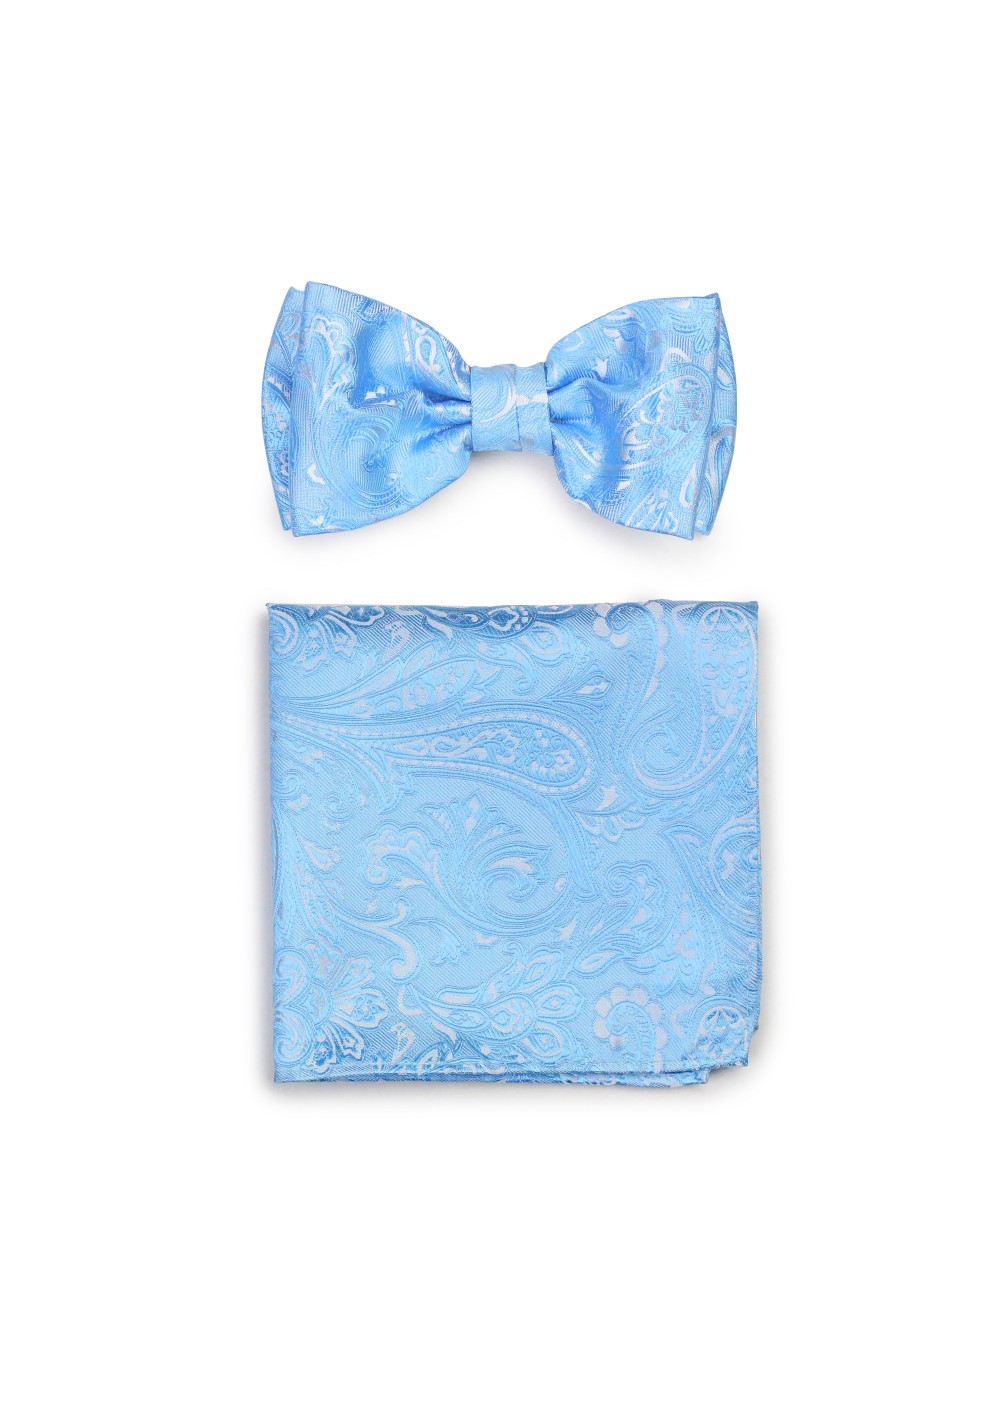 New formal Men's micro fiber pre-tied bow tie & hankie set paisley black blue